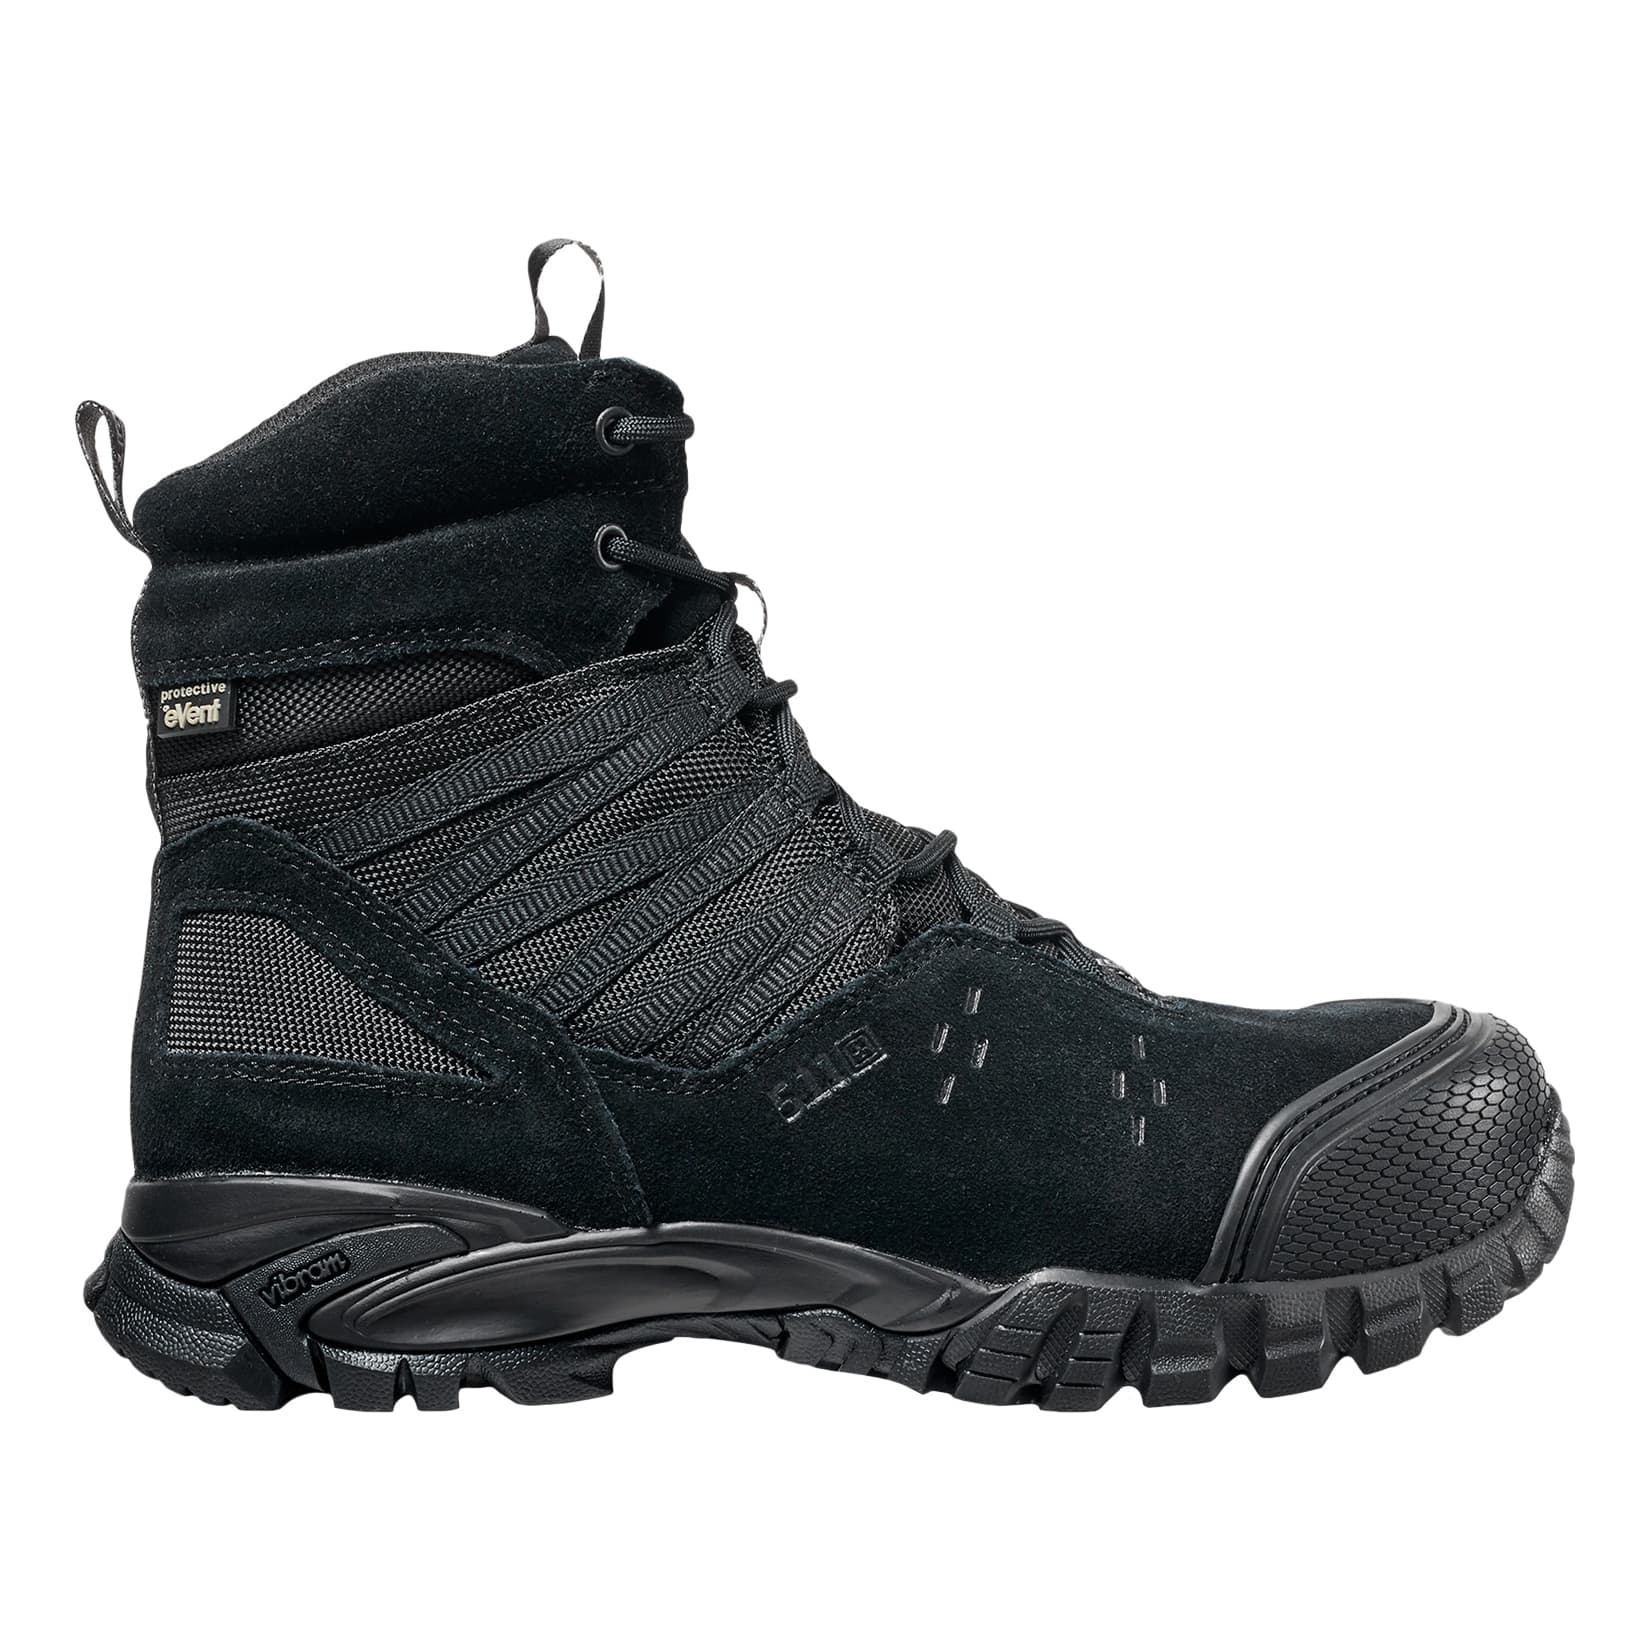 Under armour 30237480018 Men's Micro G Valsetz Zip Size 8 Black Boot 